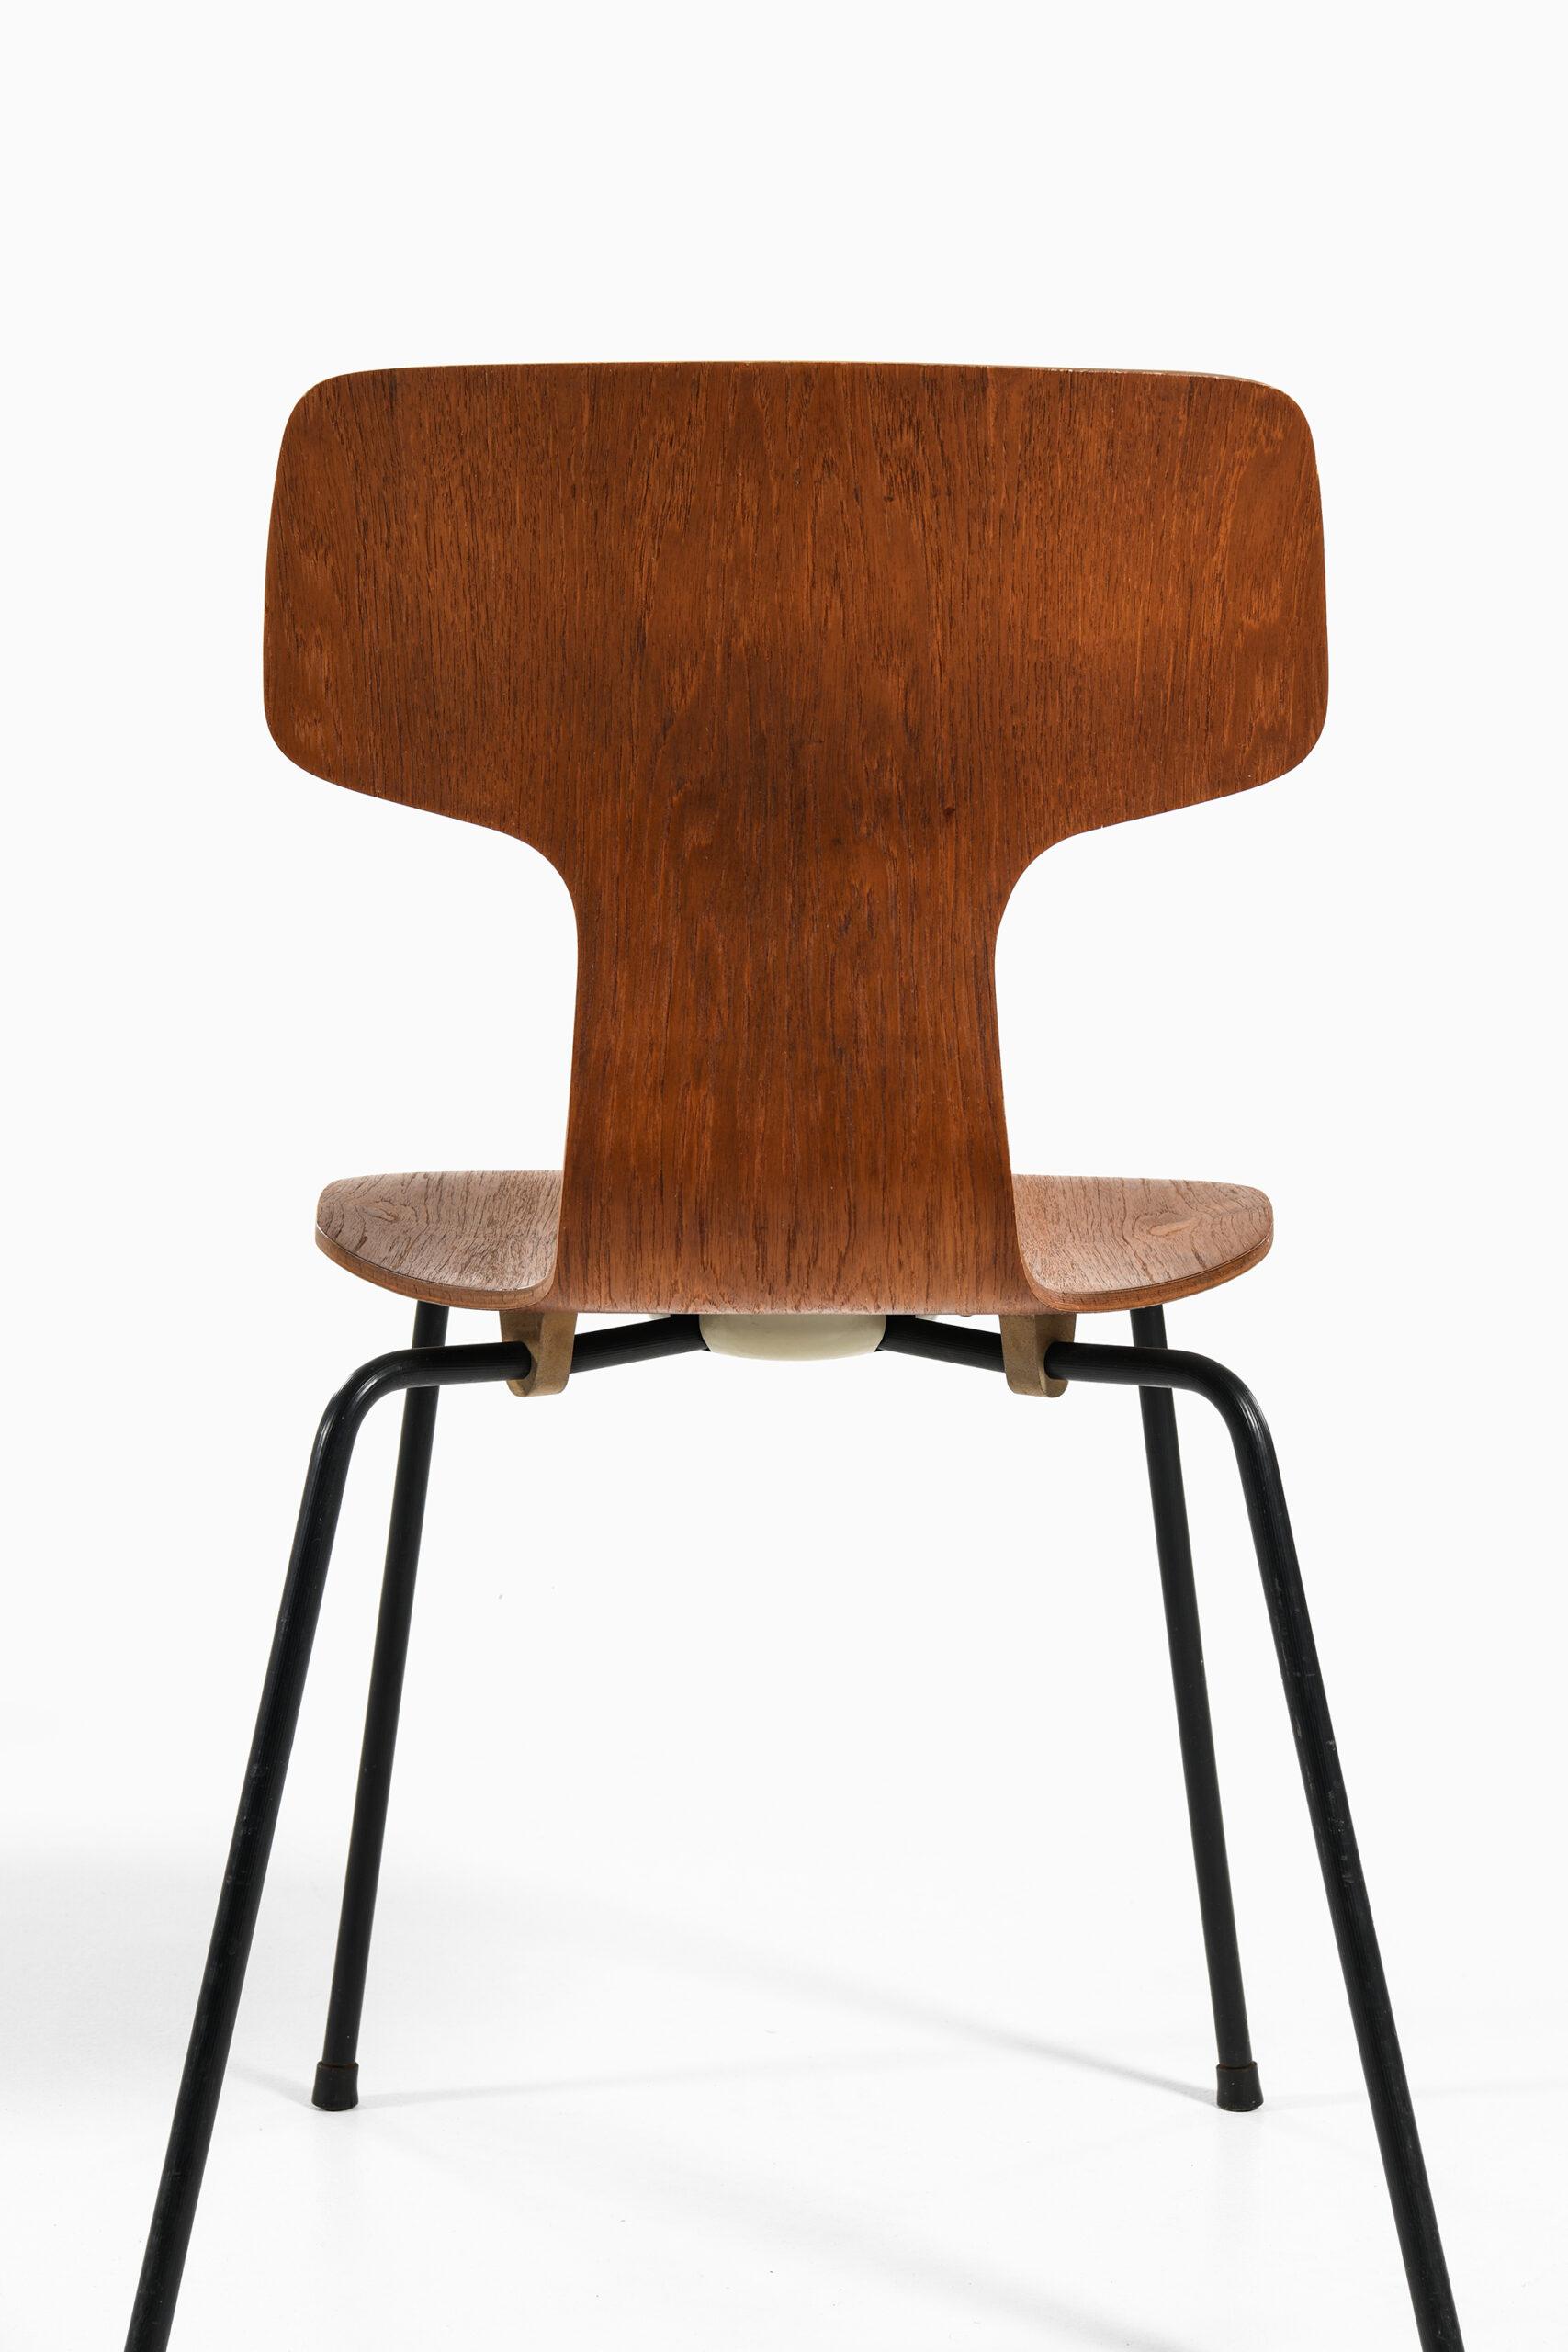 Scandinavian Modern Arne Jacobsen Dining Chairs Model 3103 / 'T' Produced by Fritz Hansen For Sale